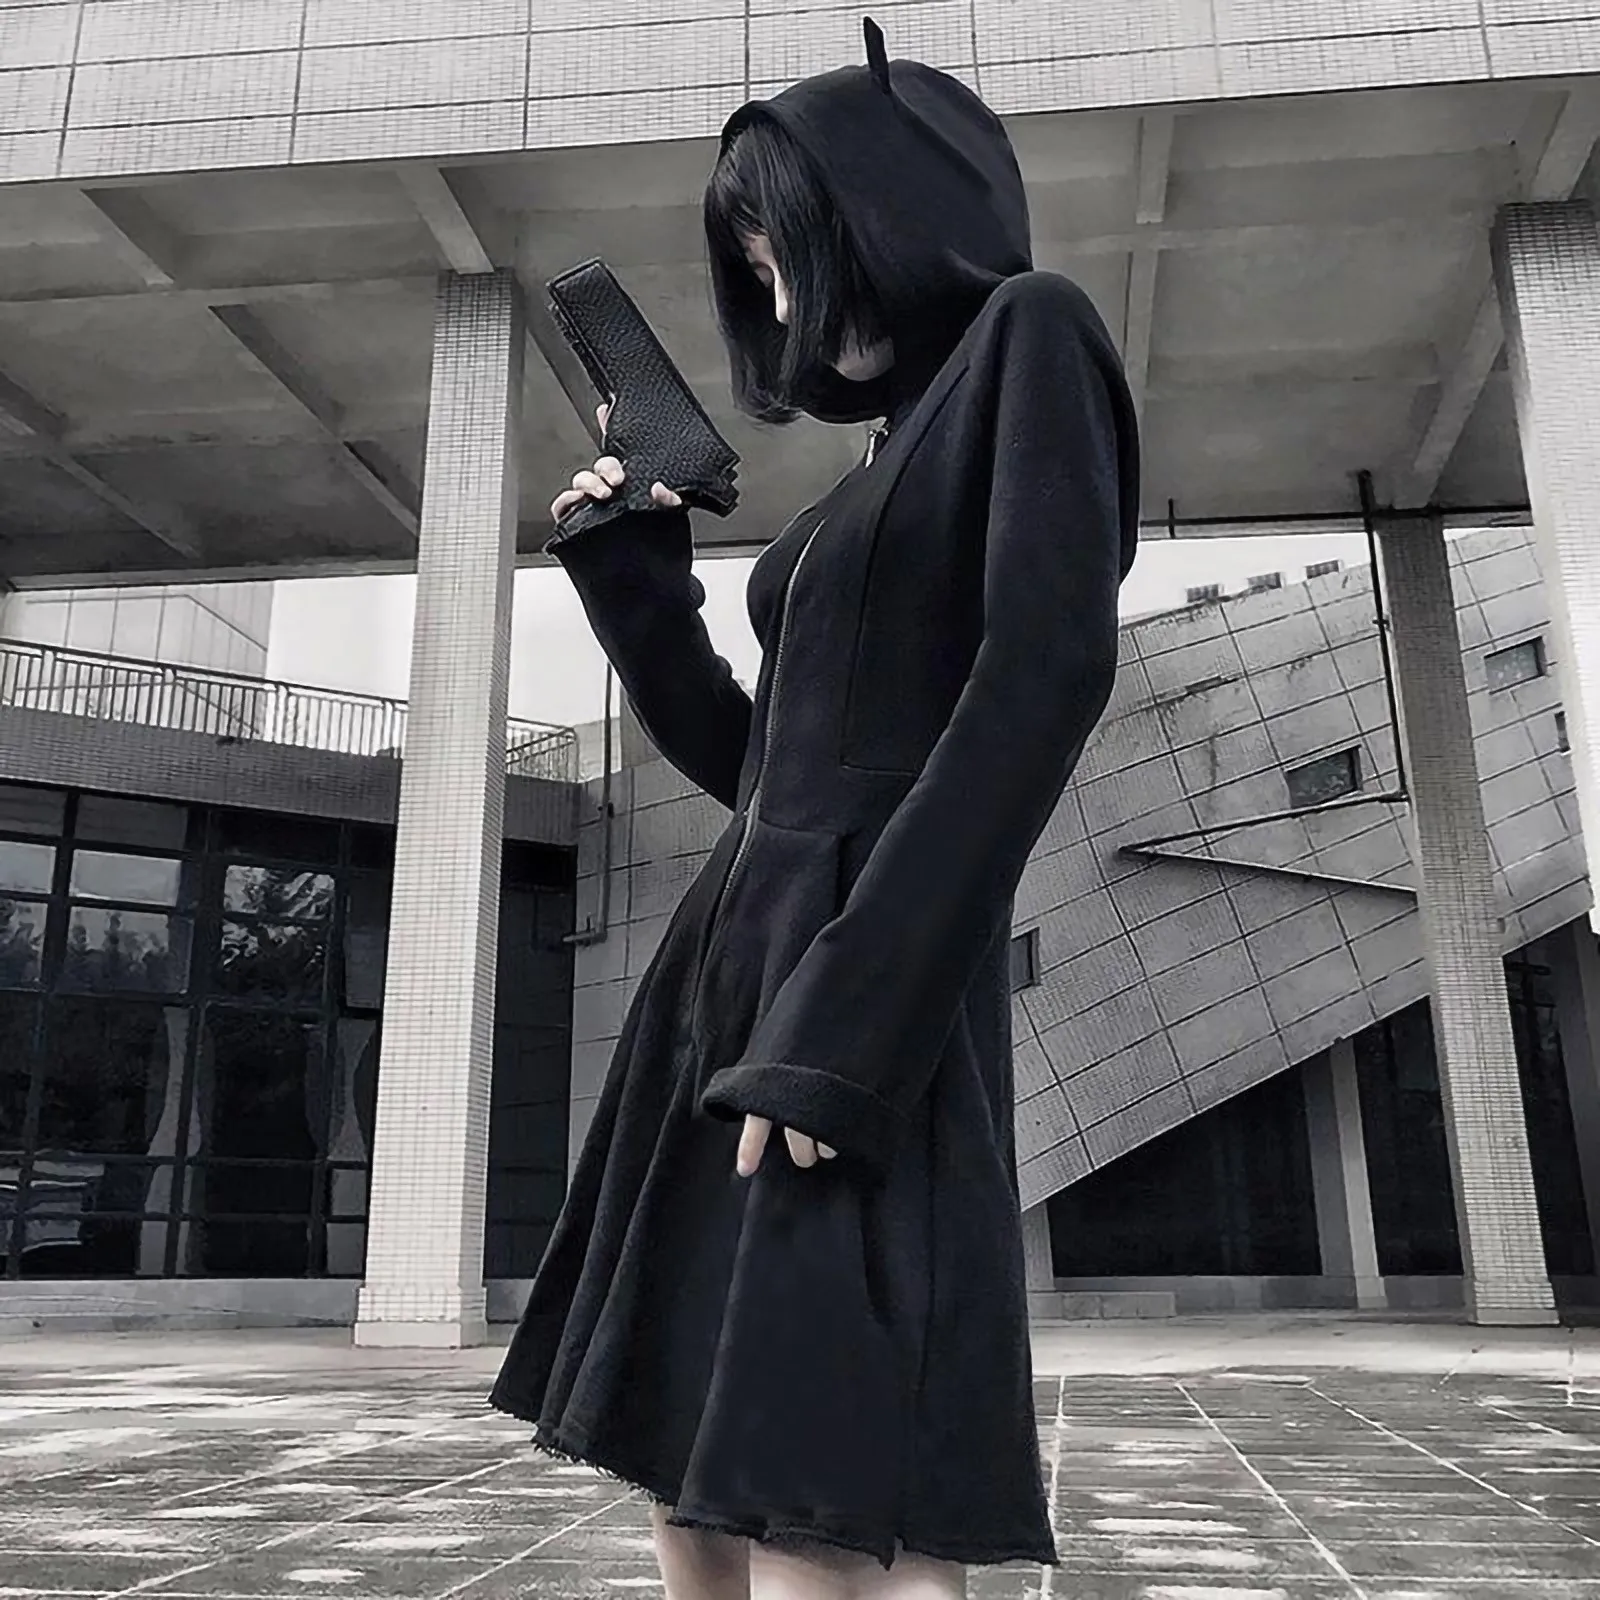 Y2k Black Gothic Hoodies Dress Womens Ears Hat Lace Up Sweatshirts Hooded Tops Harajuku Oversize Leisure Tracksuit Cardigan Coat